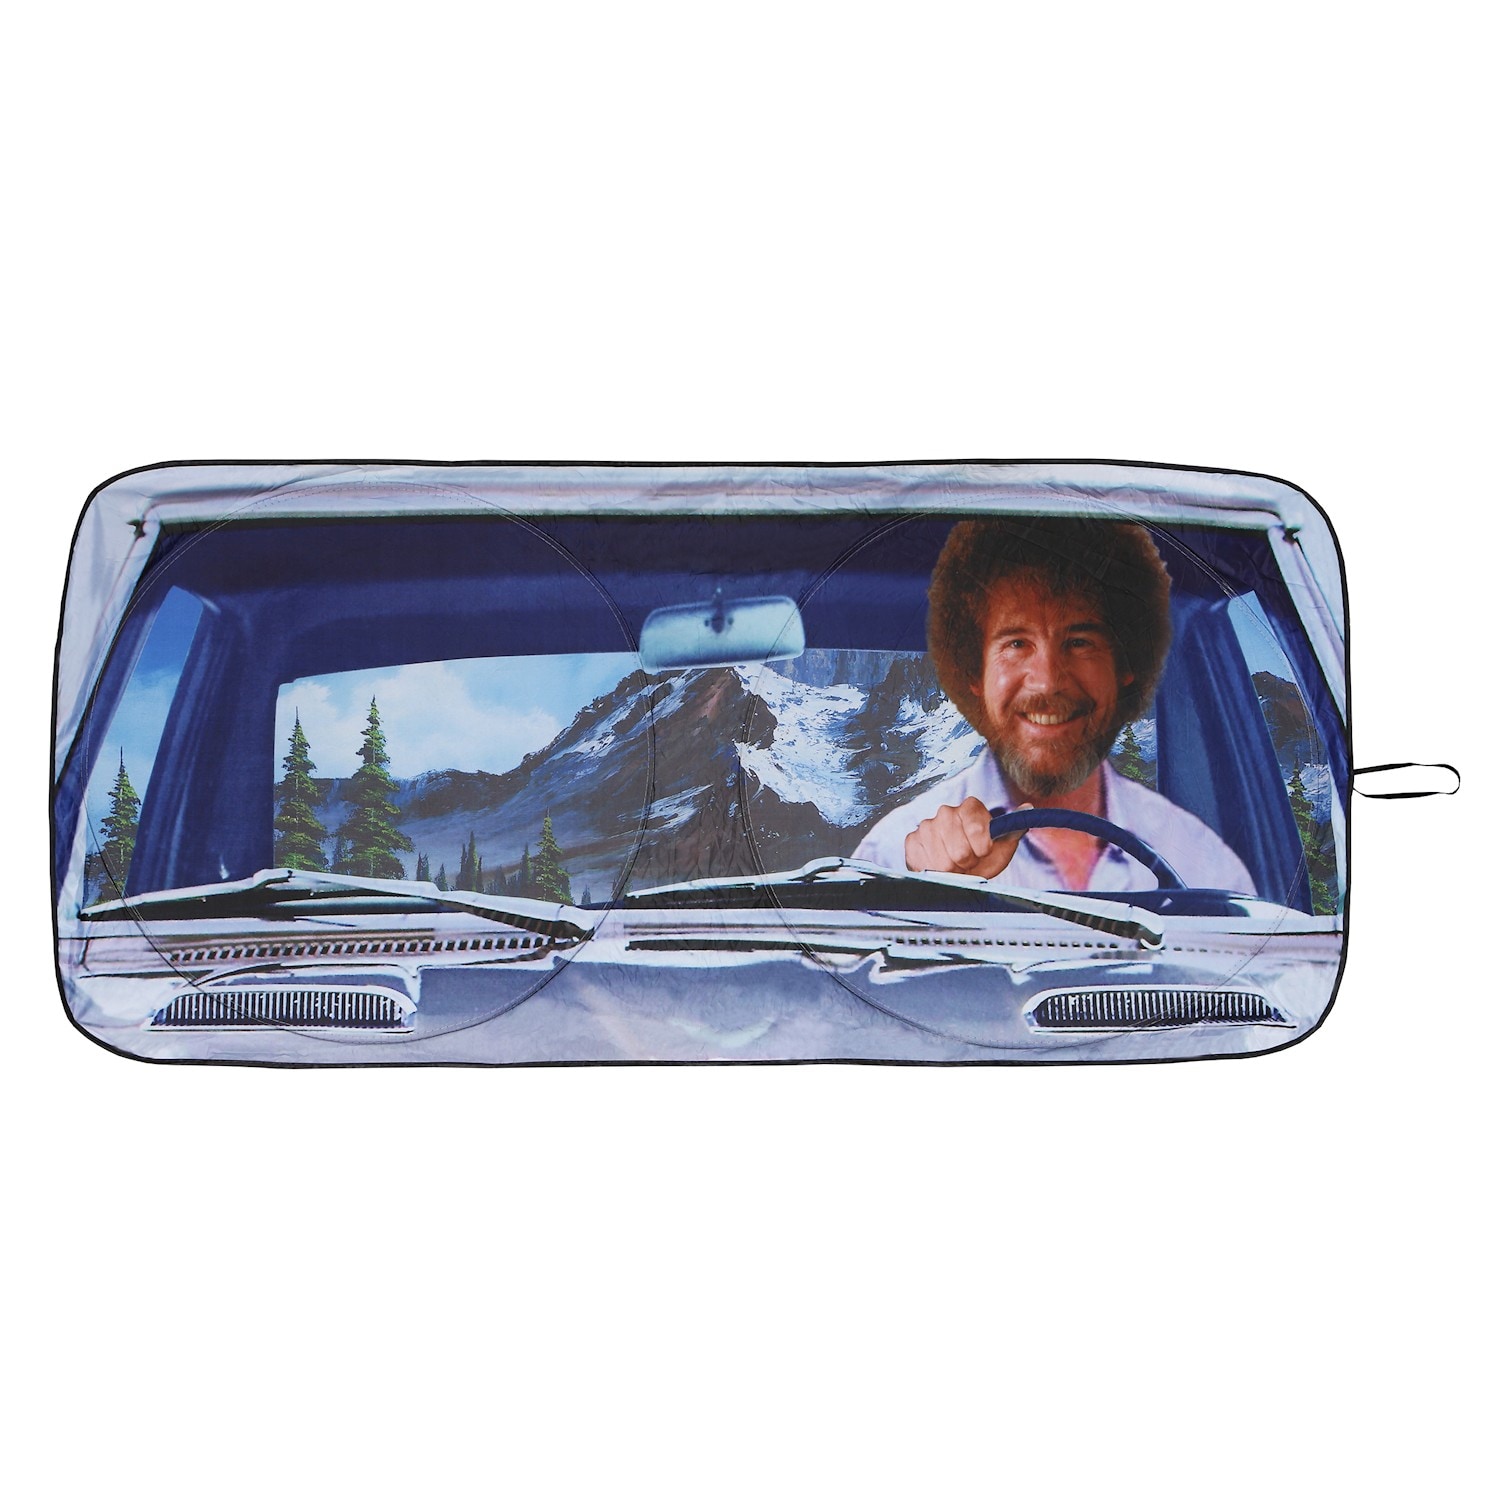 Surreal Bob Ross Car Sunshade, Joy of Painting Auto Windshield Screen 59.5" x 27" - image 2 of 9